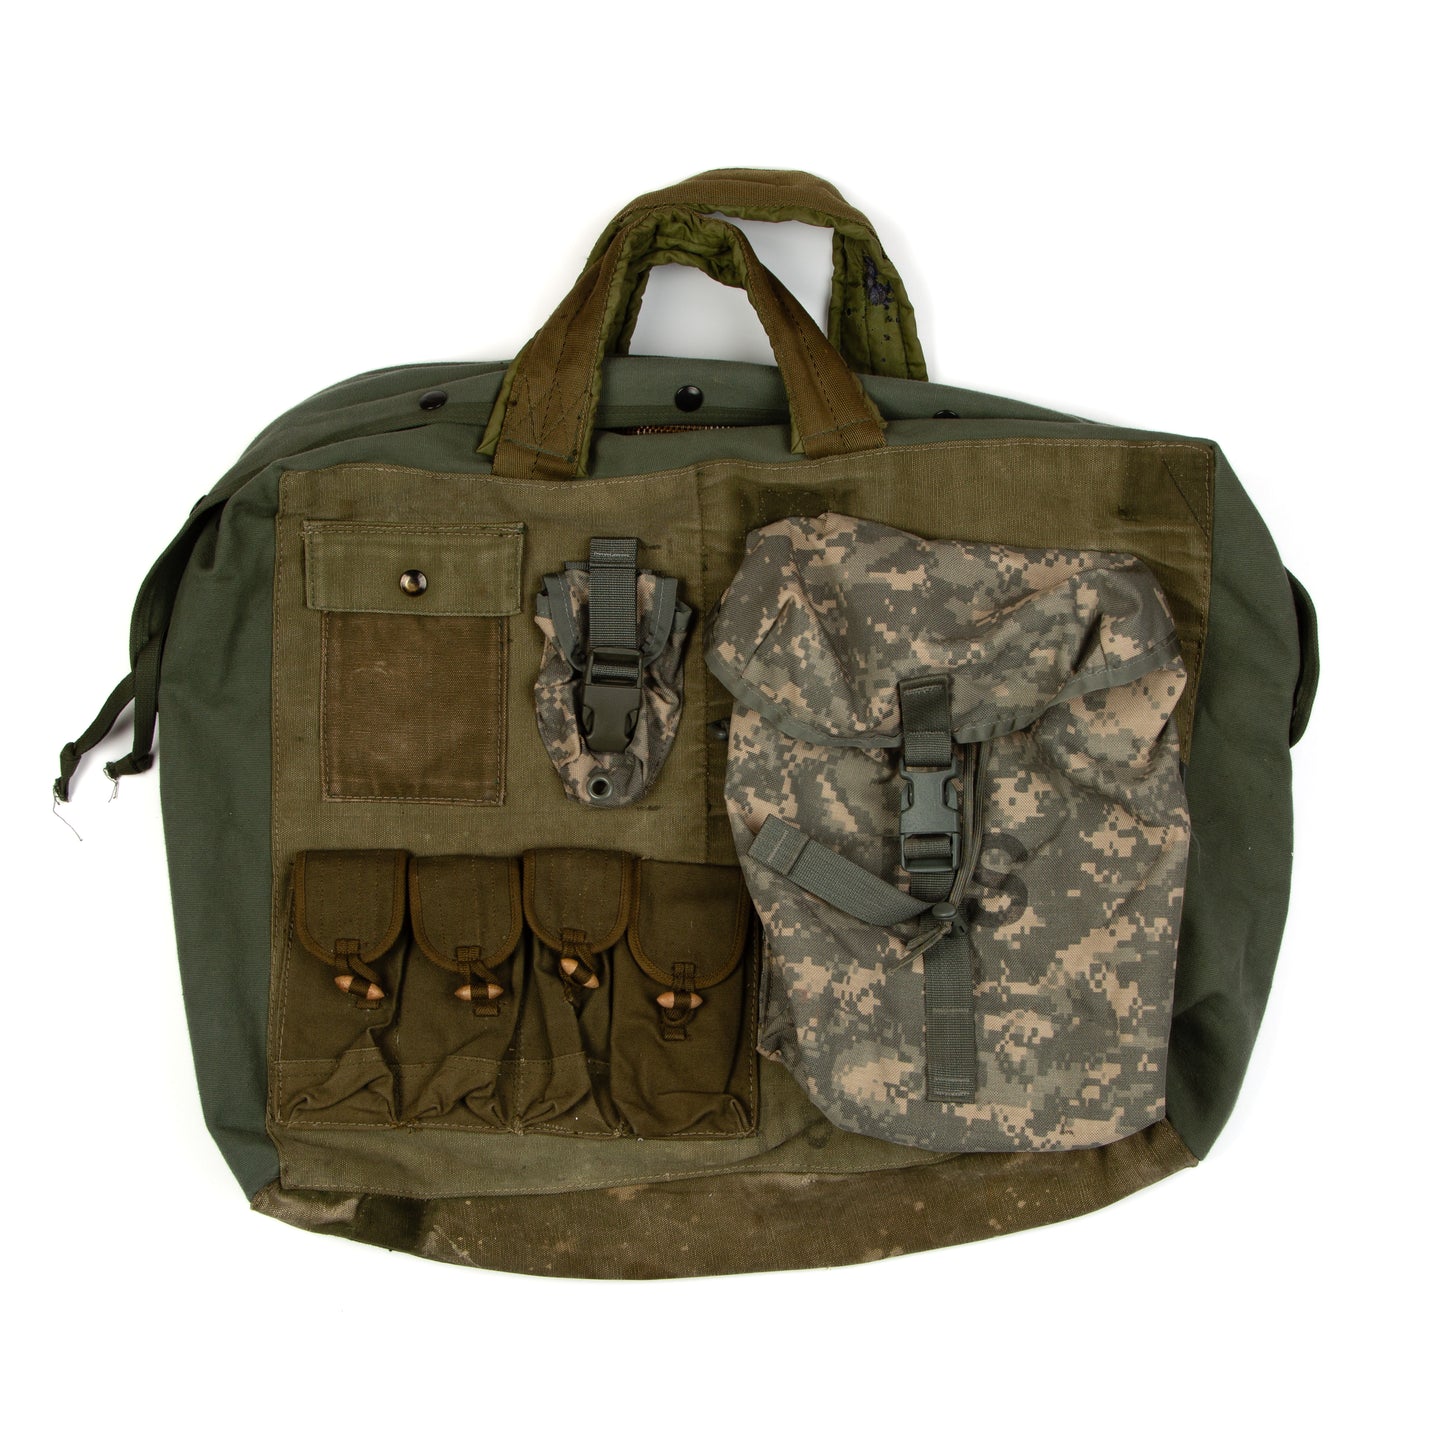 "ARMY" Bag